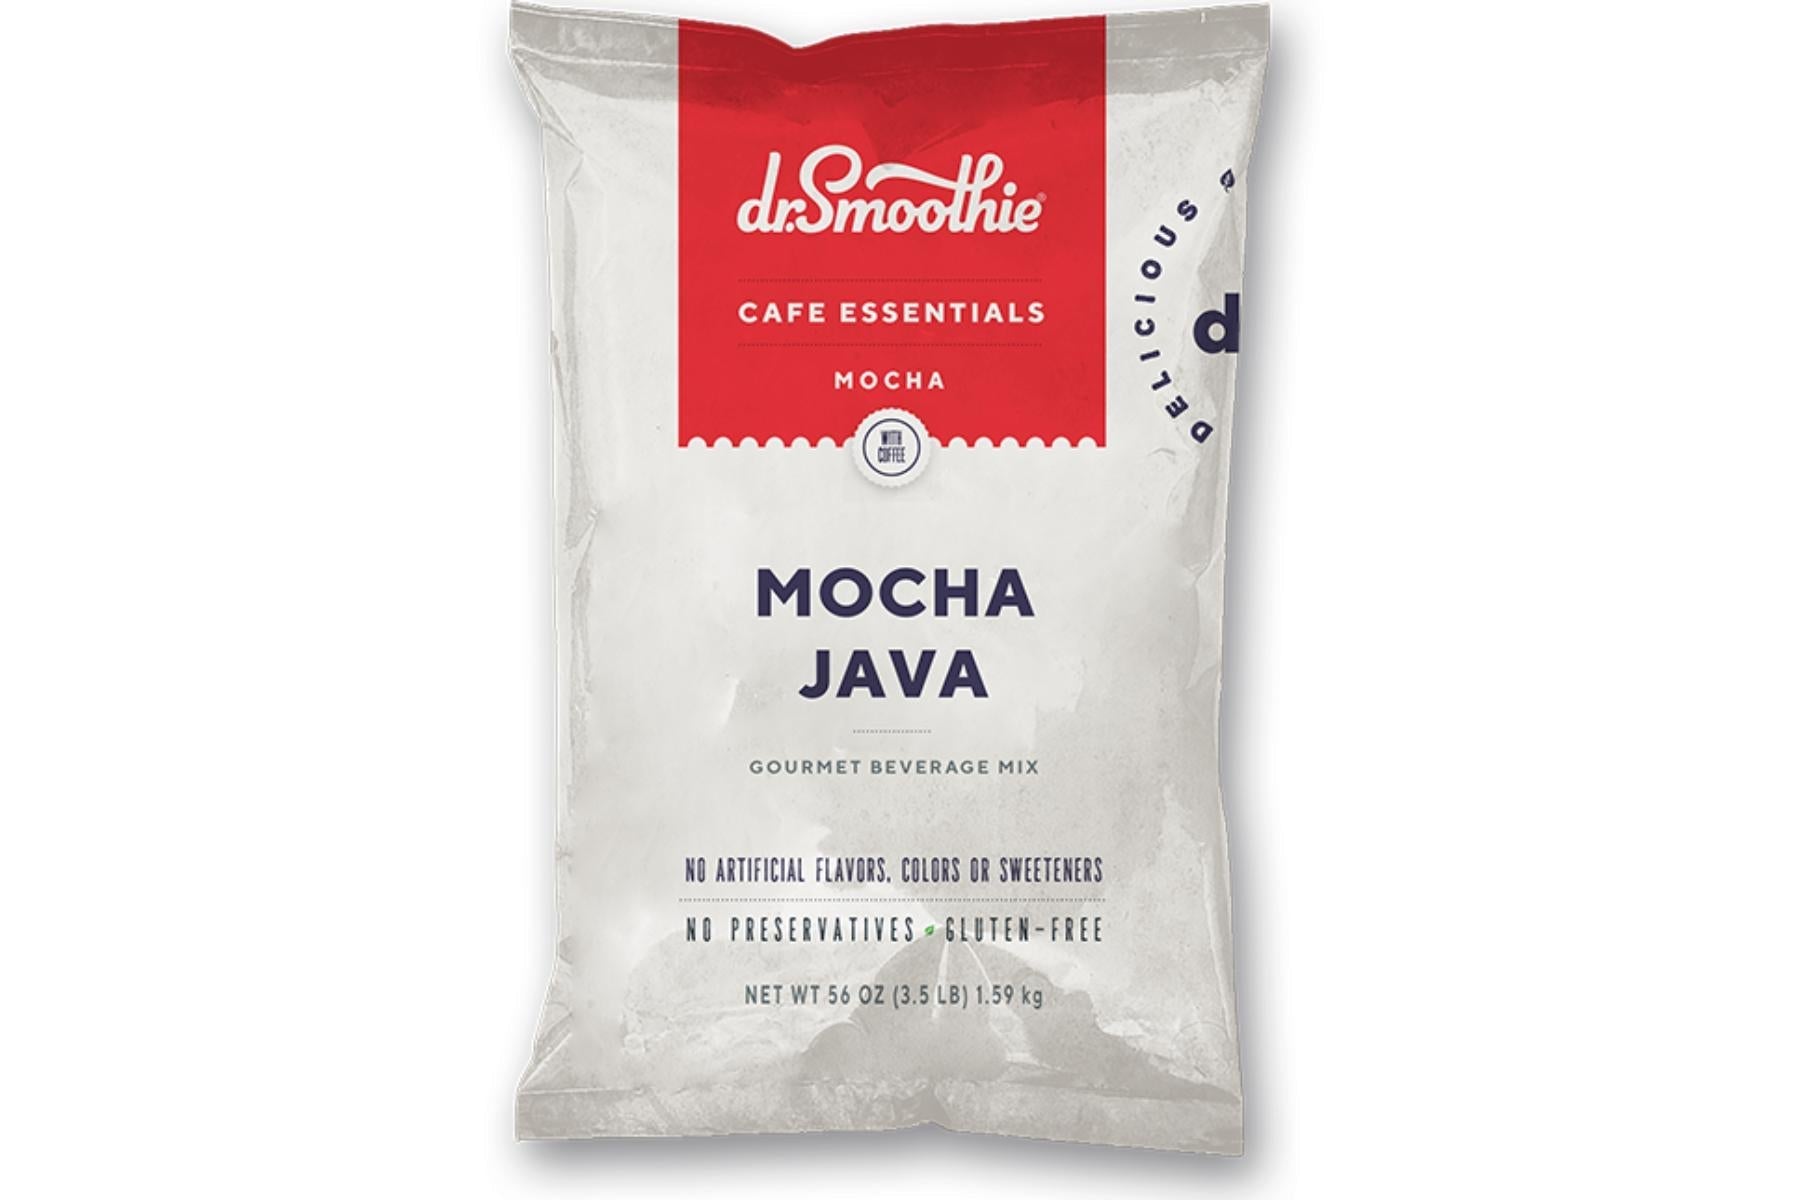 Dr. Smoothie Cafe Essentials Mocha - 25lb Bulk Box: Mocha Java